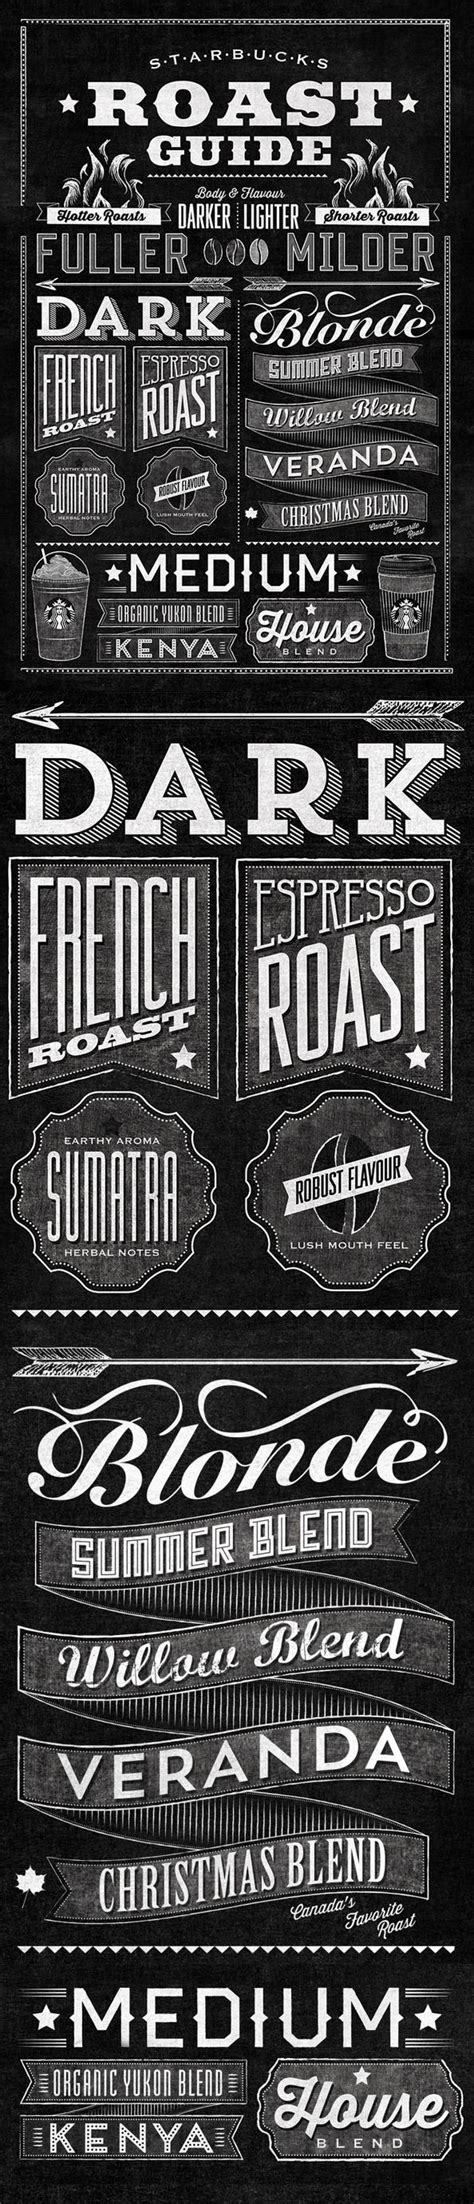 Starbucks Roast Guide Typographic Mural By Jaymie Mcammond Via Behance